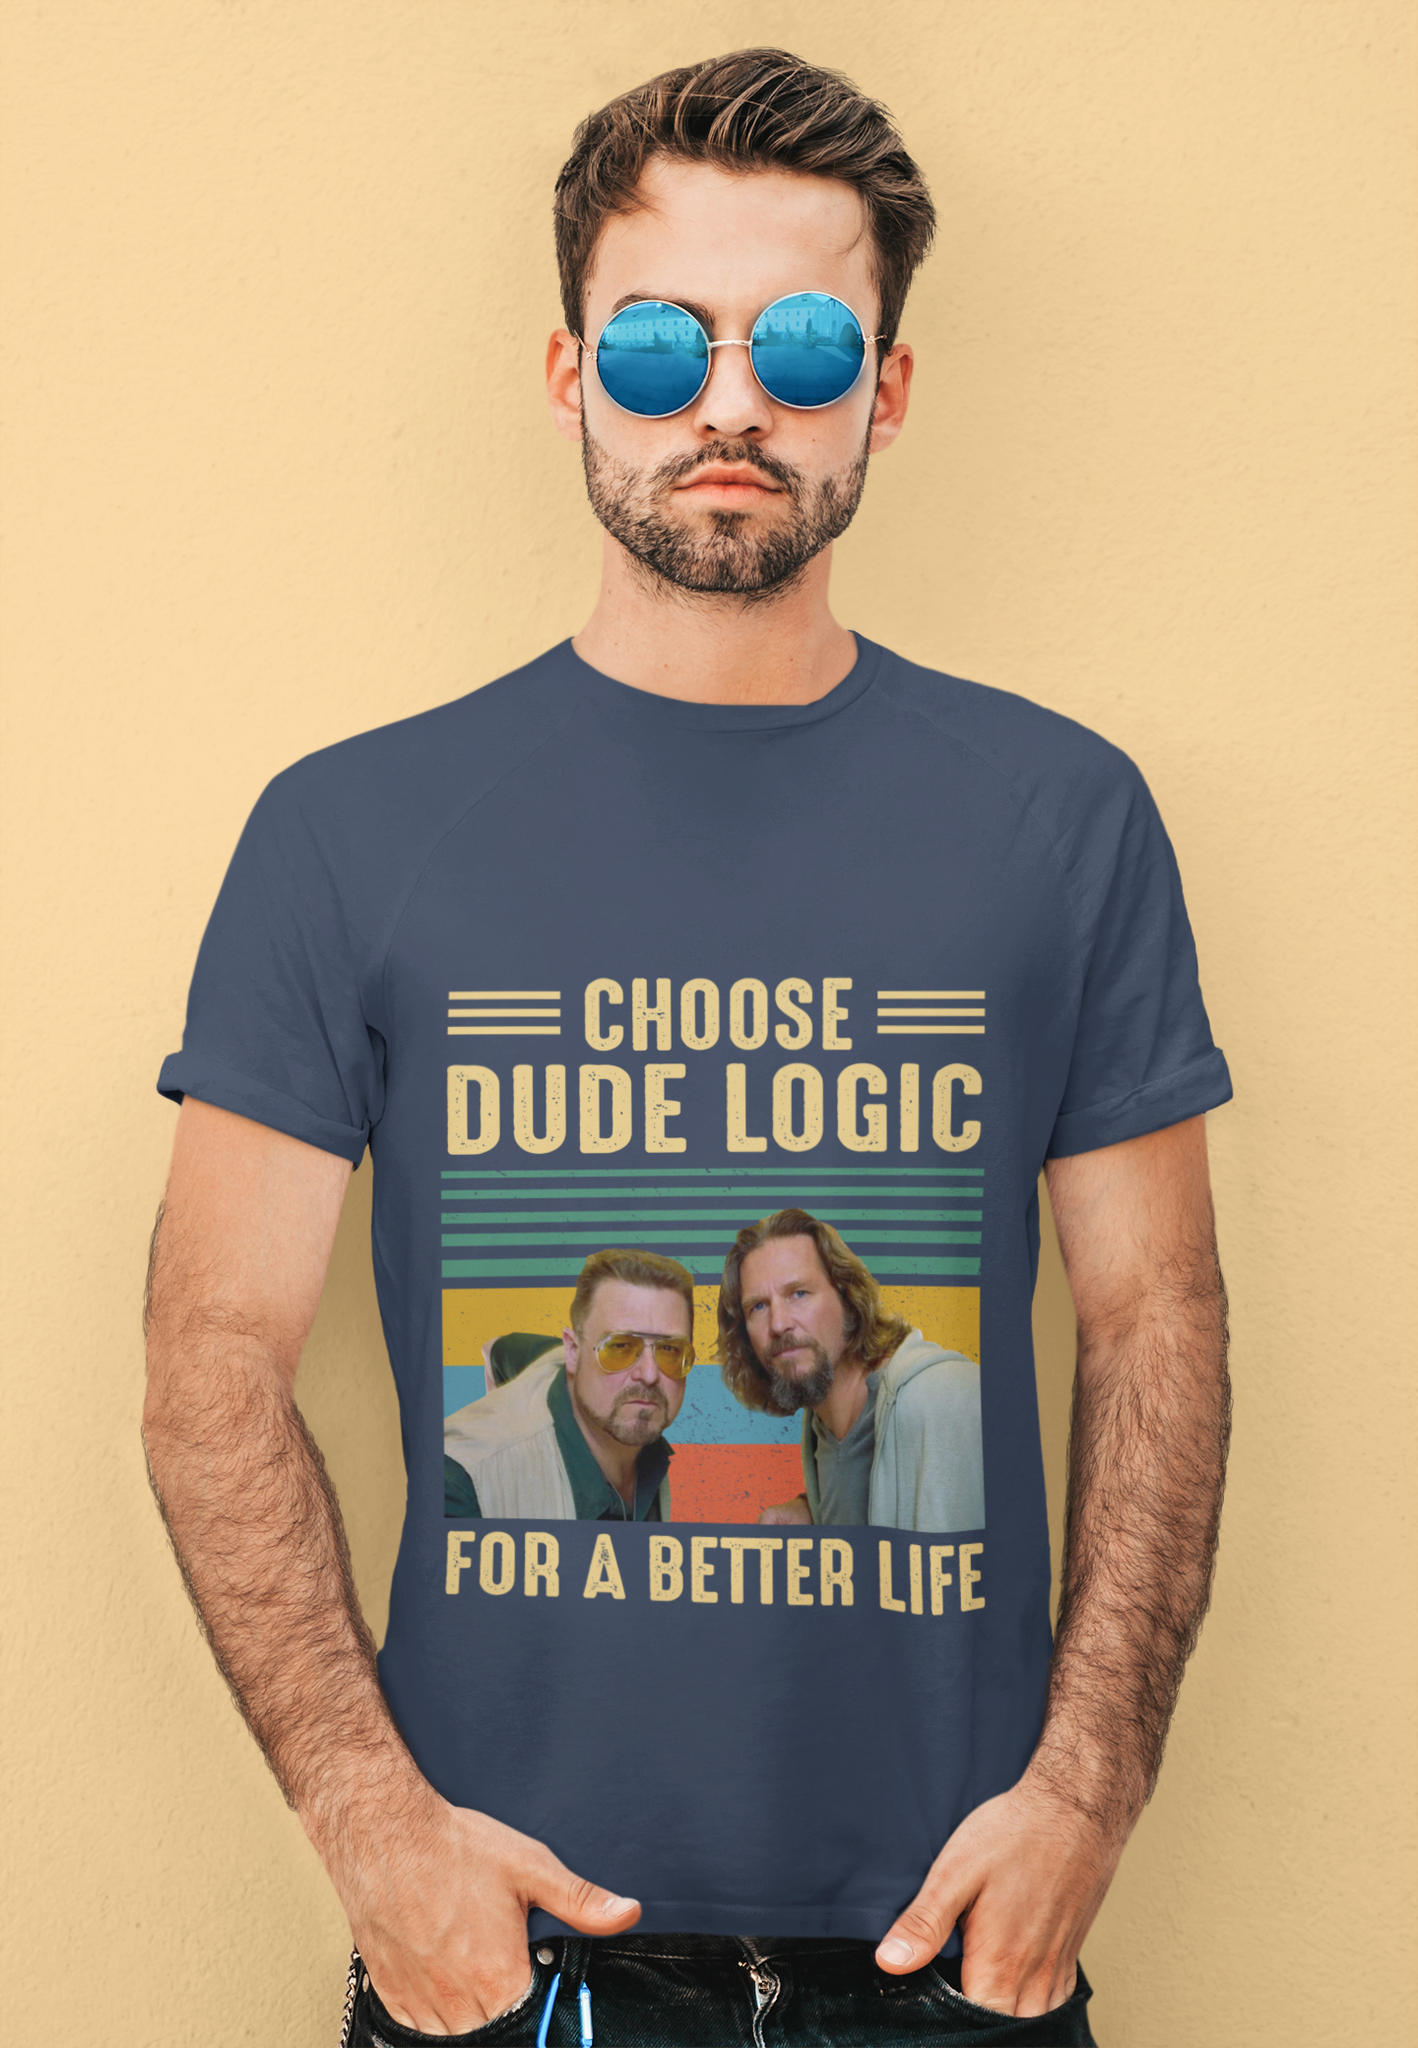 The Big Lebowski T Shirt, The Dude Walter Sobchak T Shirt, Choose Dude Logic For A Better Life Tshirt